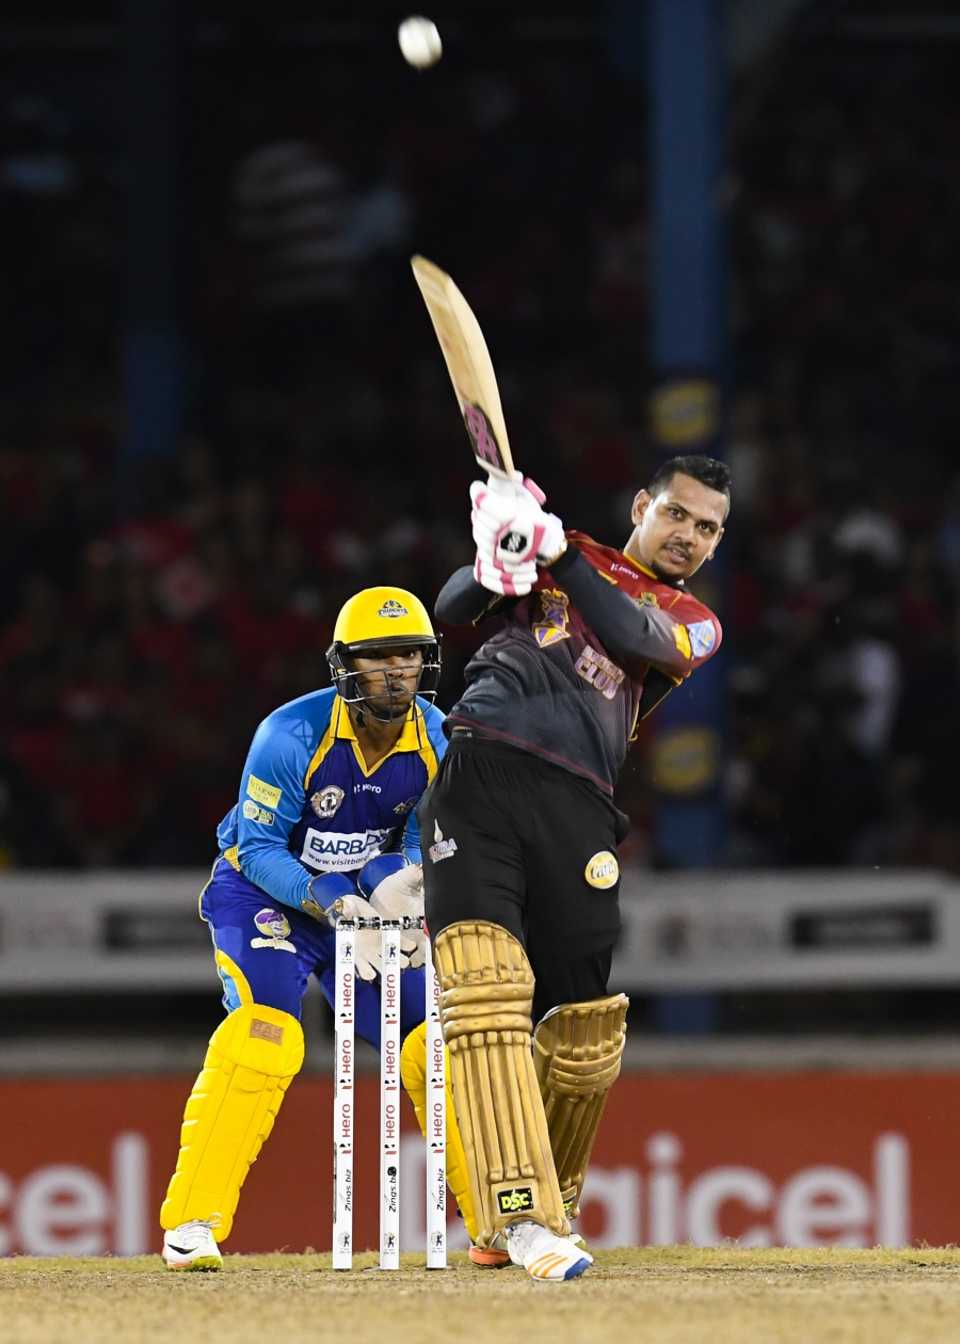 Sunil Narine waltzed to his career-best T20 score